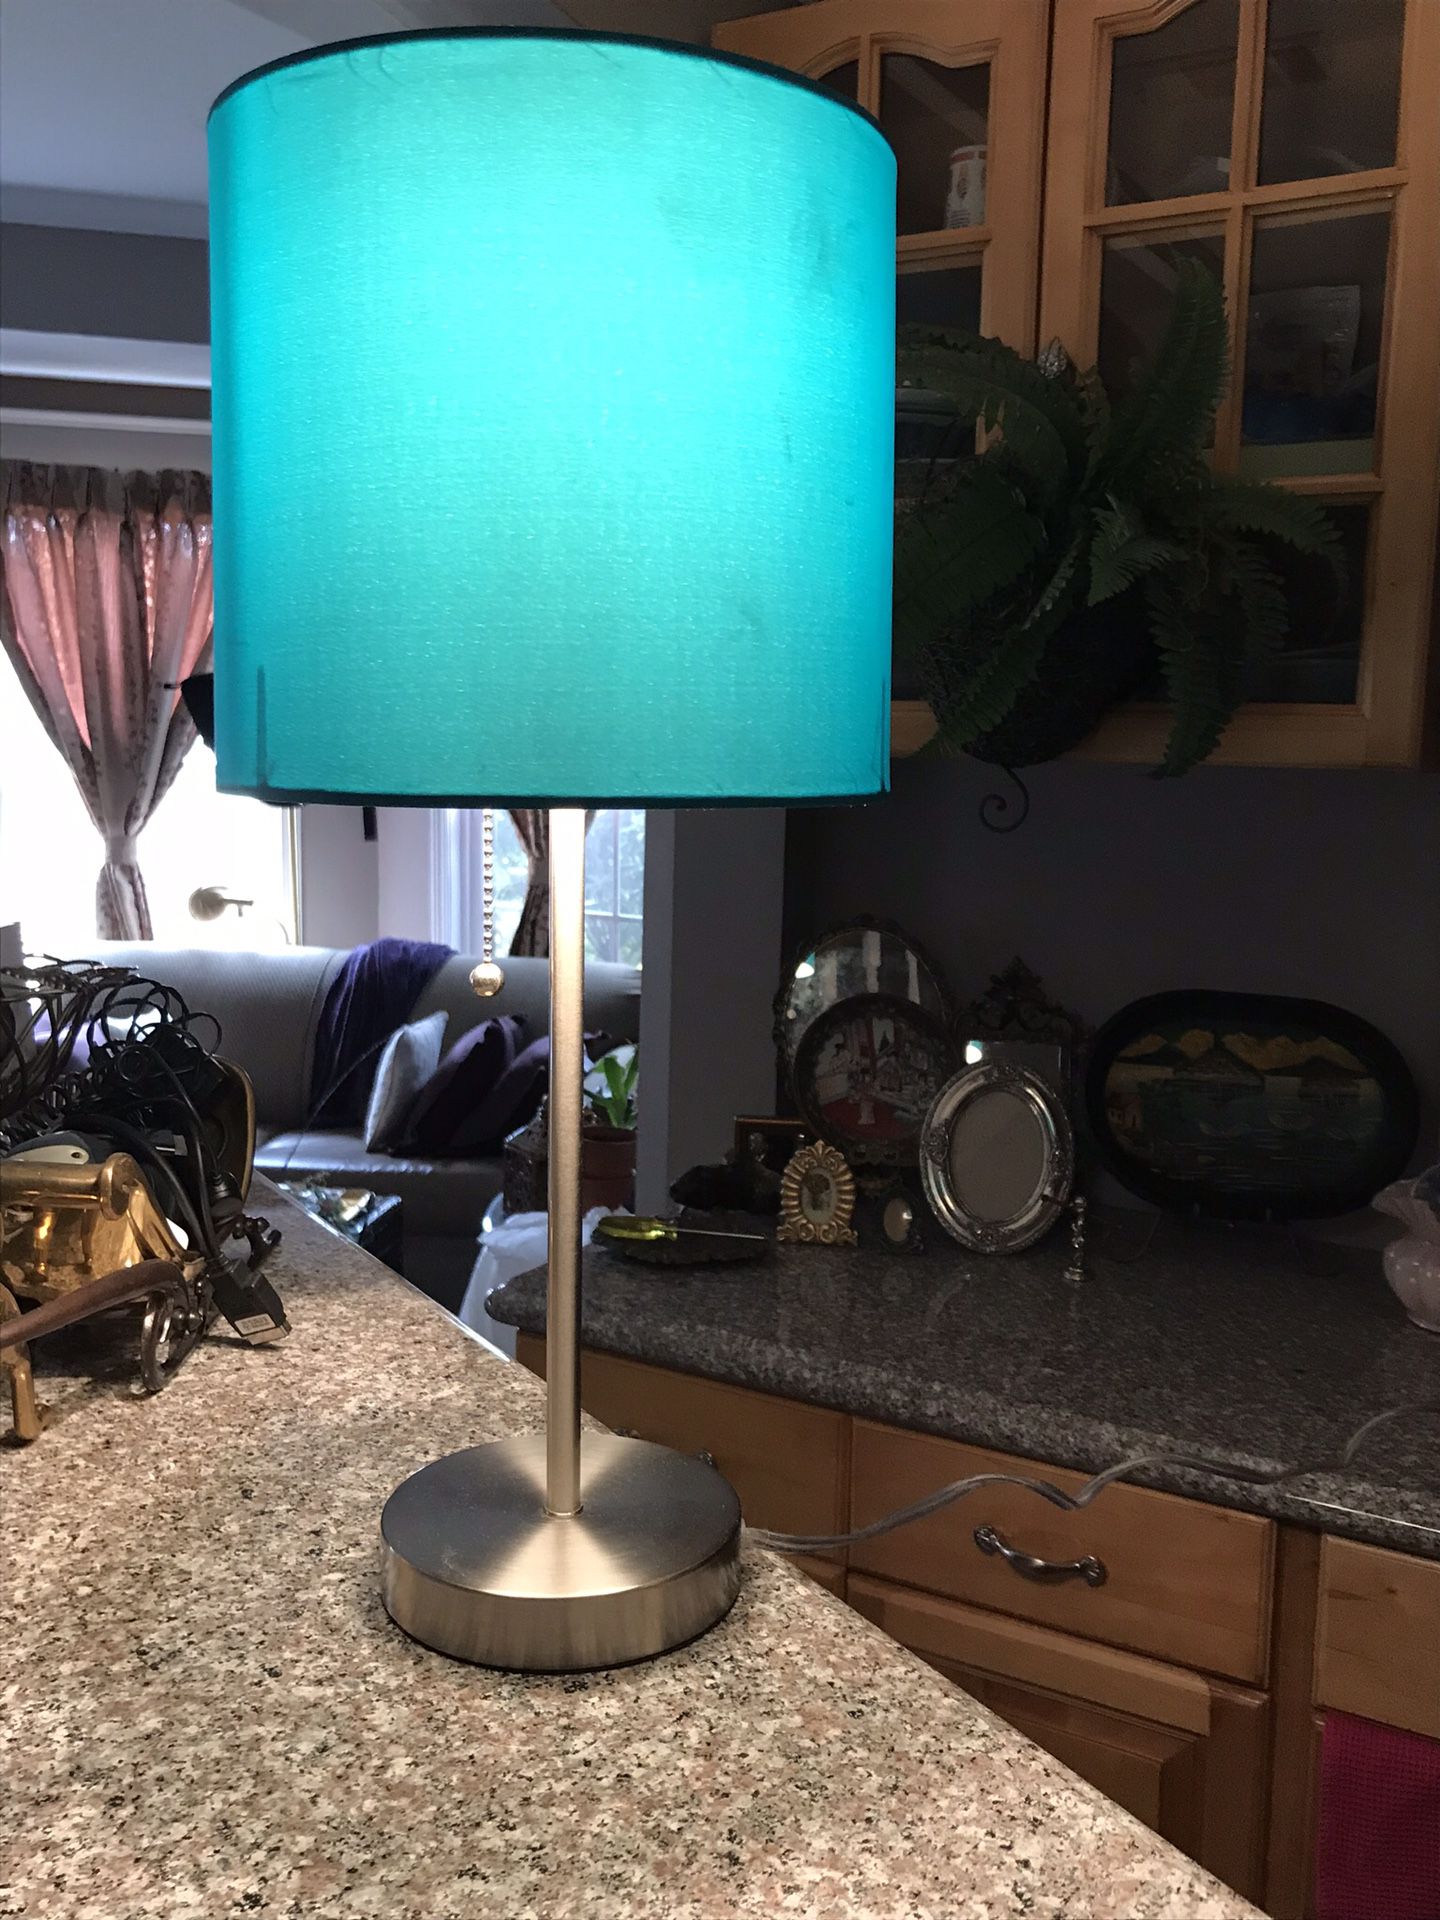 Set of sleek chrome based bedside lamps w/ aqua colored shades